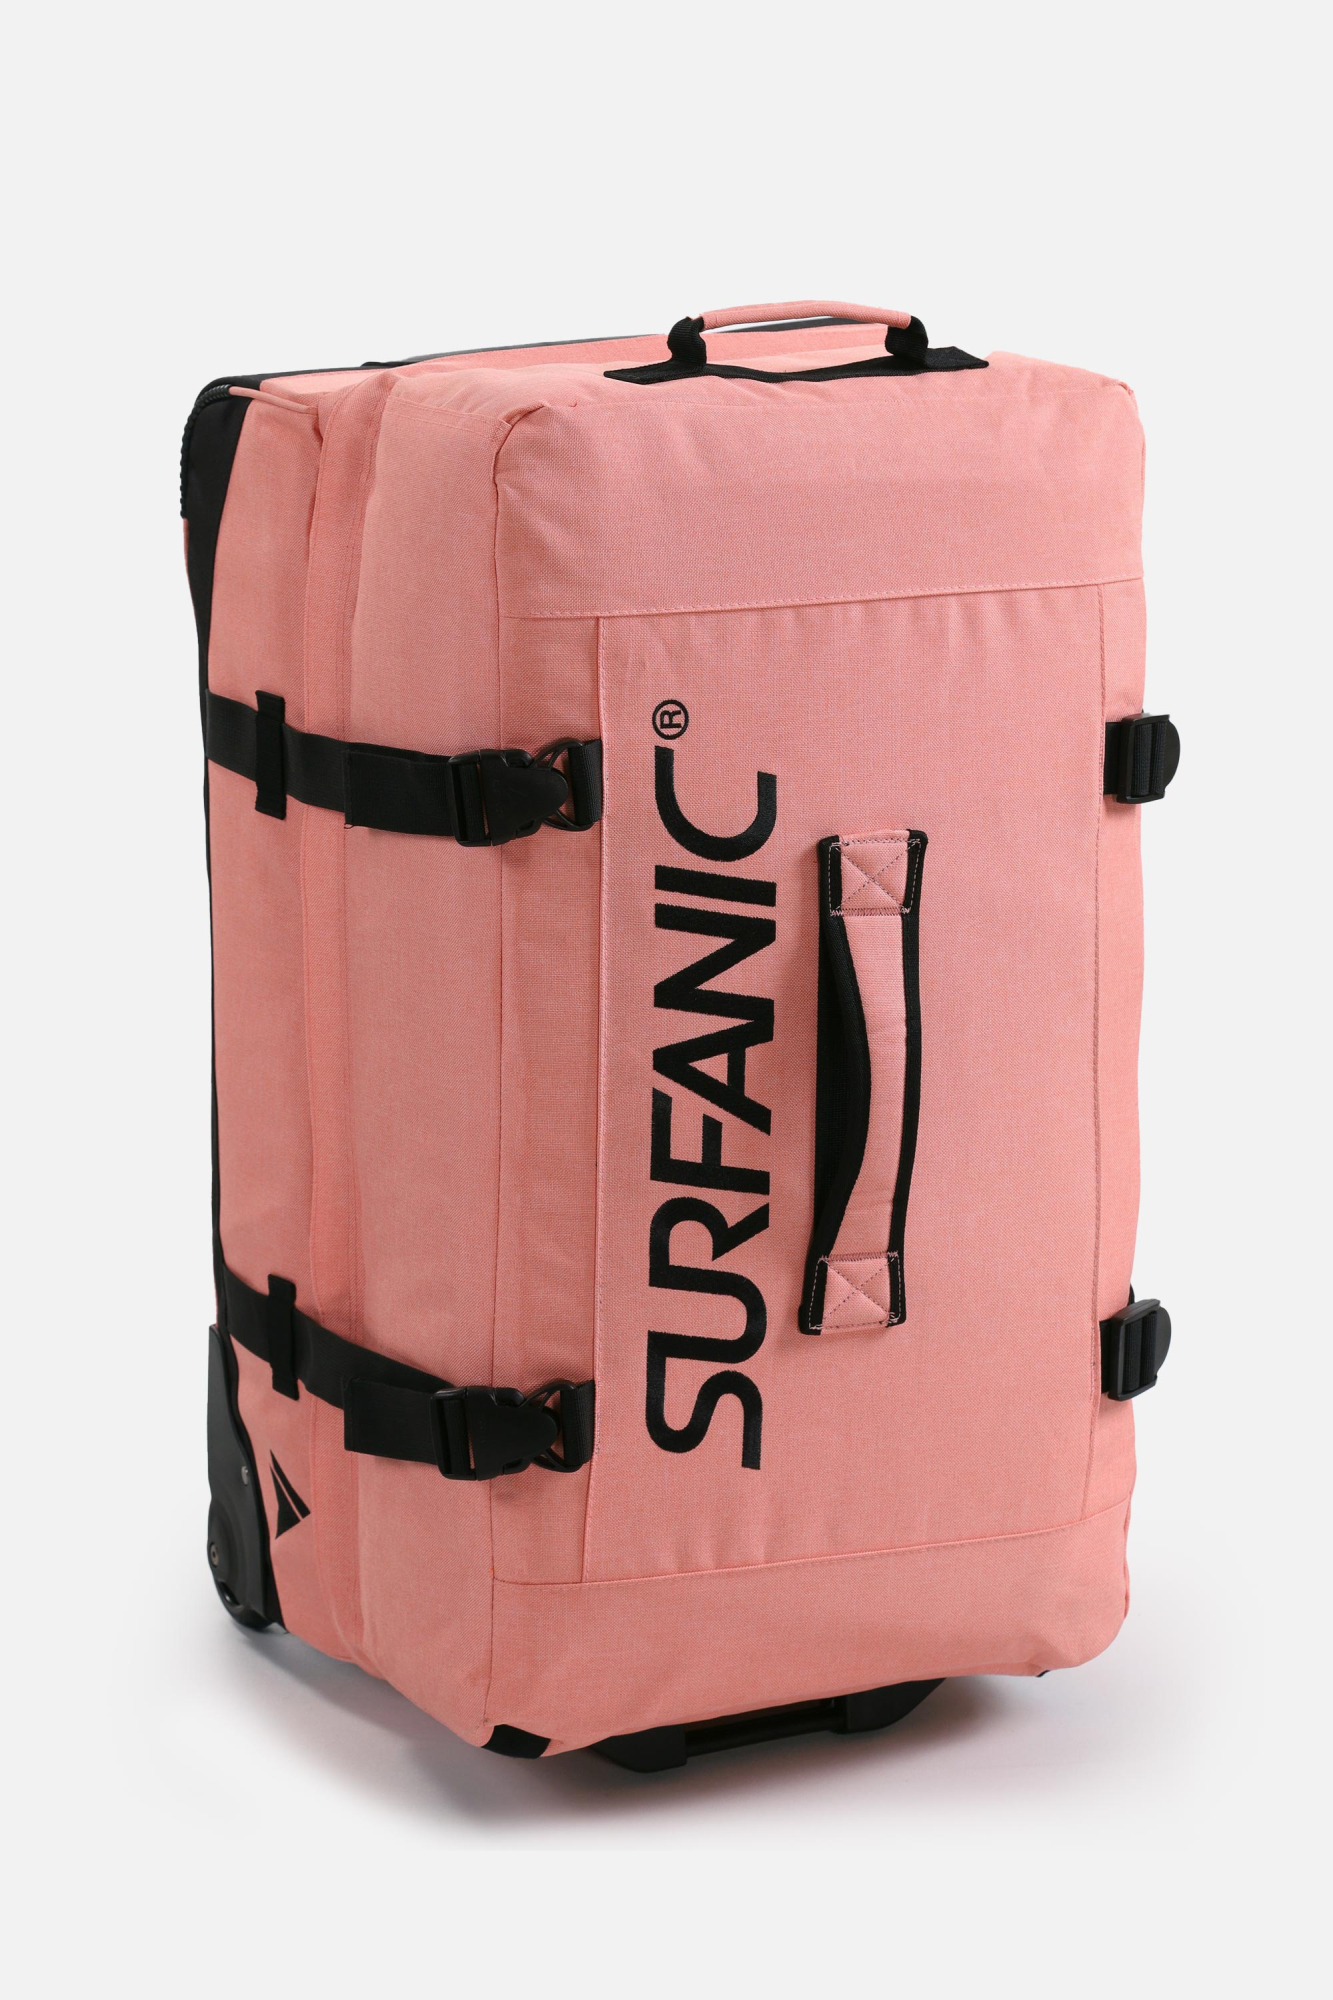 Surfanic Unisex Maxim 100 Roller Bag Pink - Size: 100 Litre